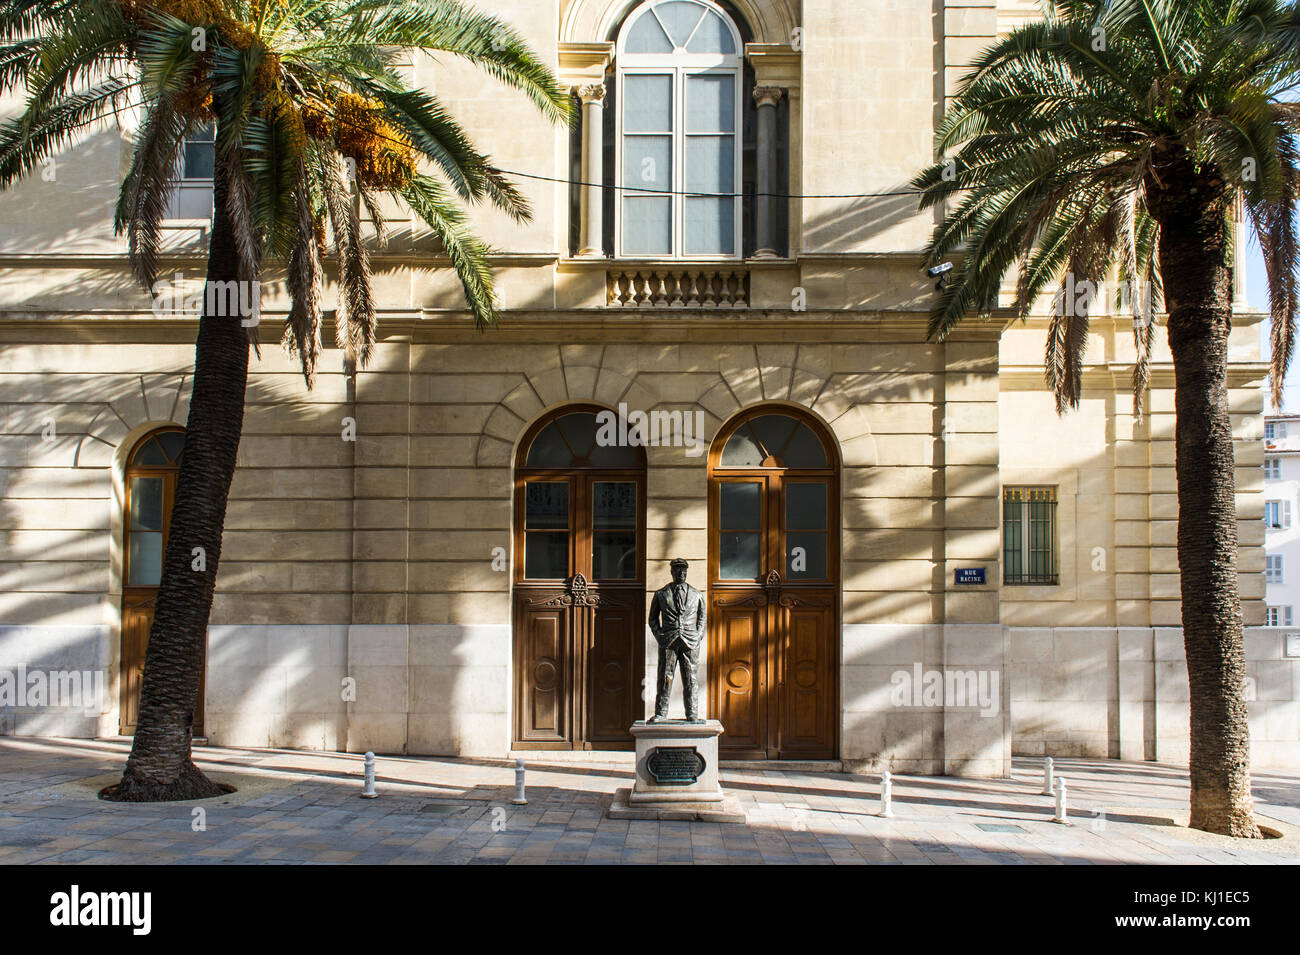 Europe, France, Var, Toulon. Statue of the famous provencal actor Raimu. Stock Photo